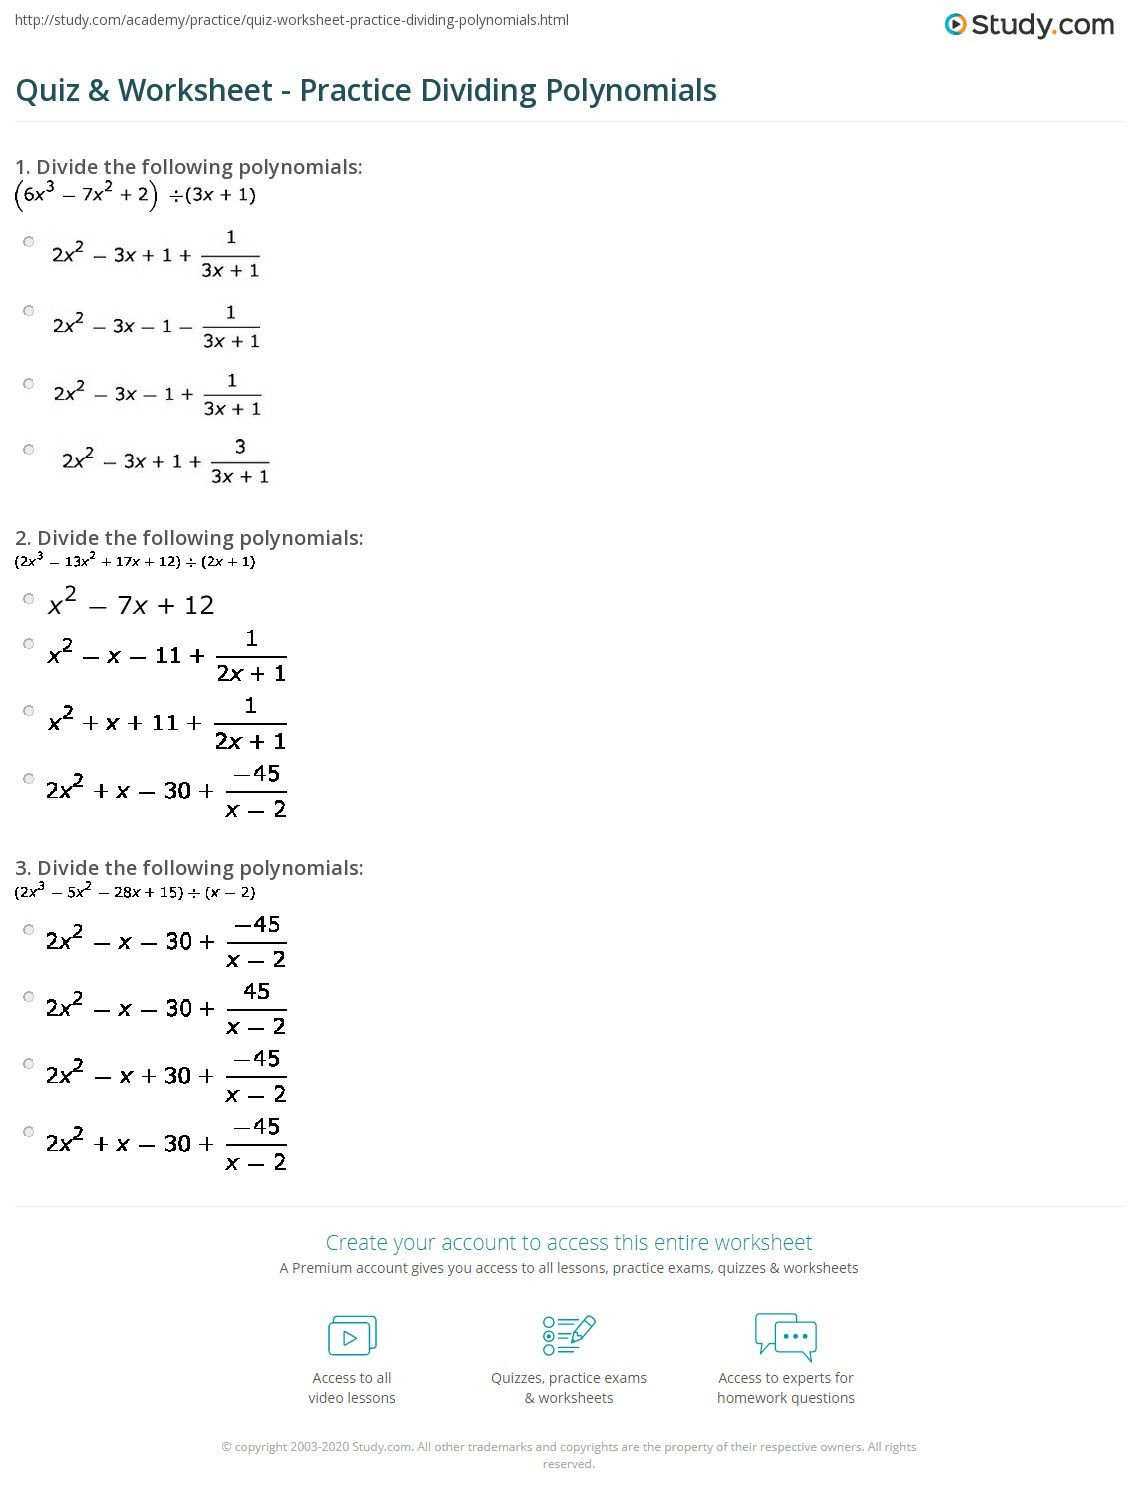 Dividing Polynomials Worksheet Answers Quiz Worksheet Practice